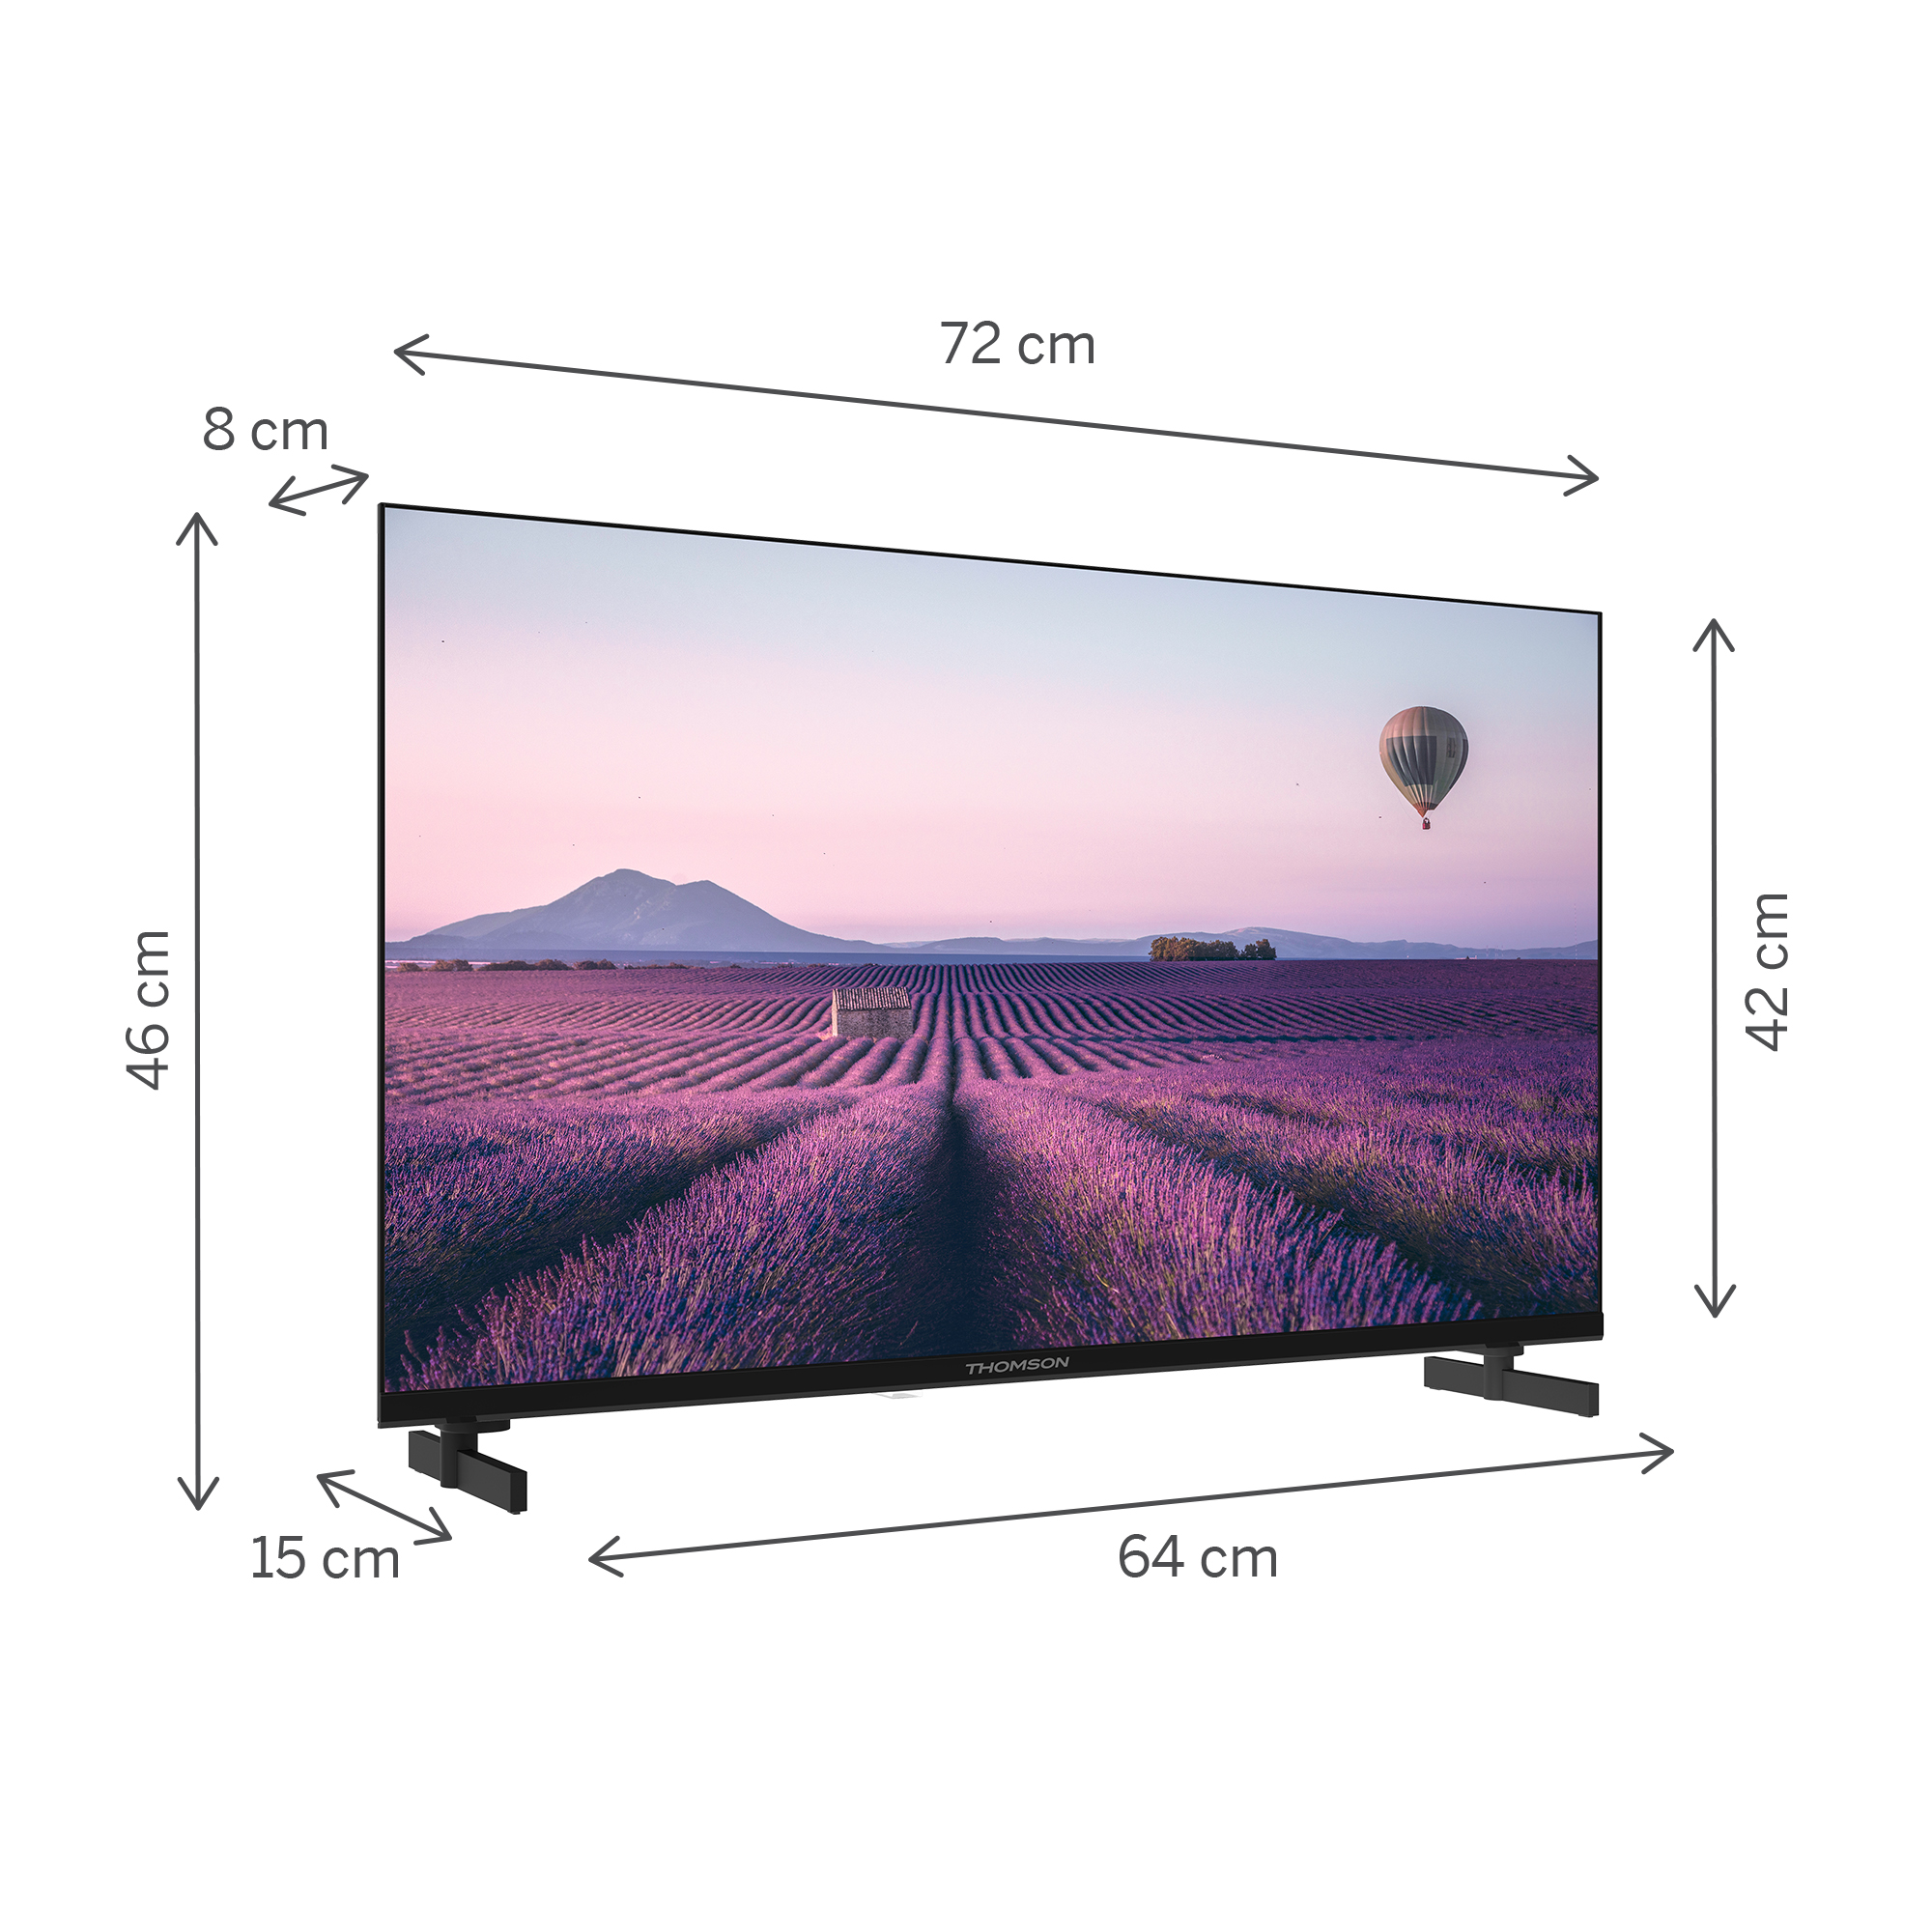 (Flat, 32FA2S13 / Zoll THOMSON 81 LED cm, 32 Full-HD) TV